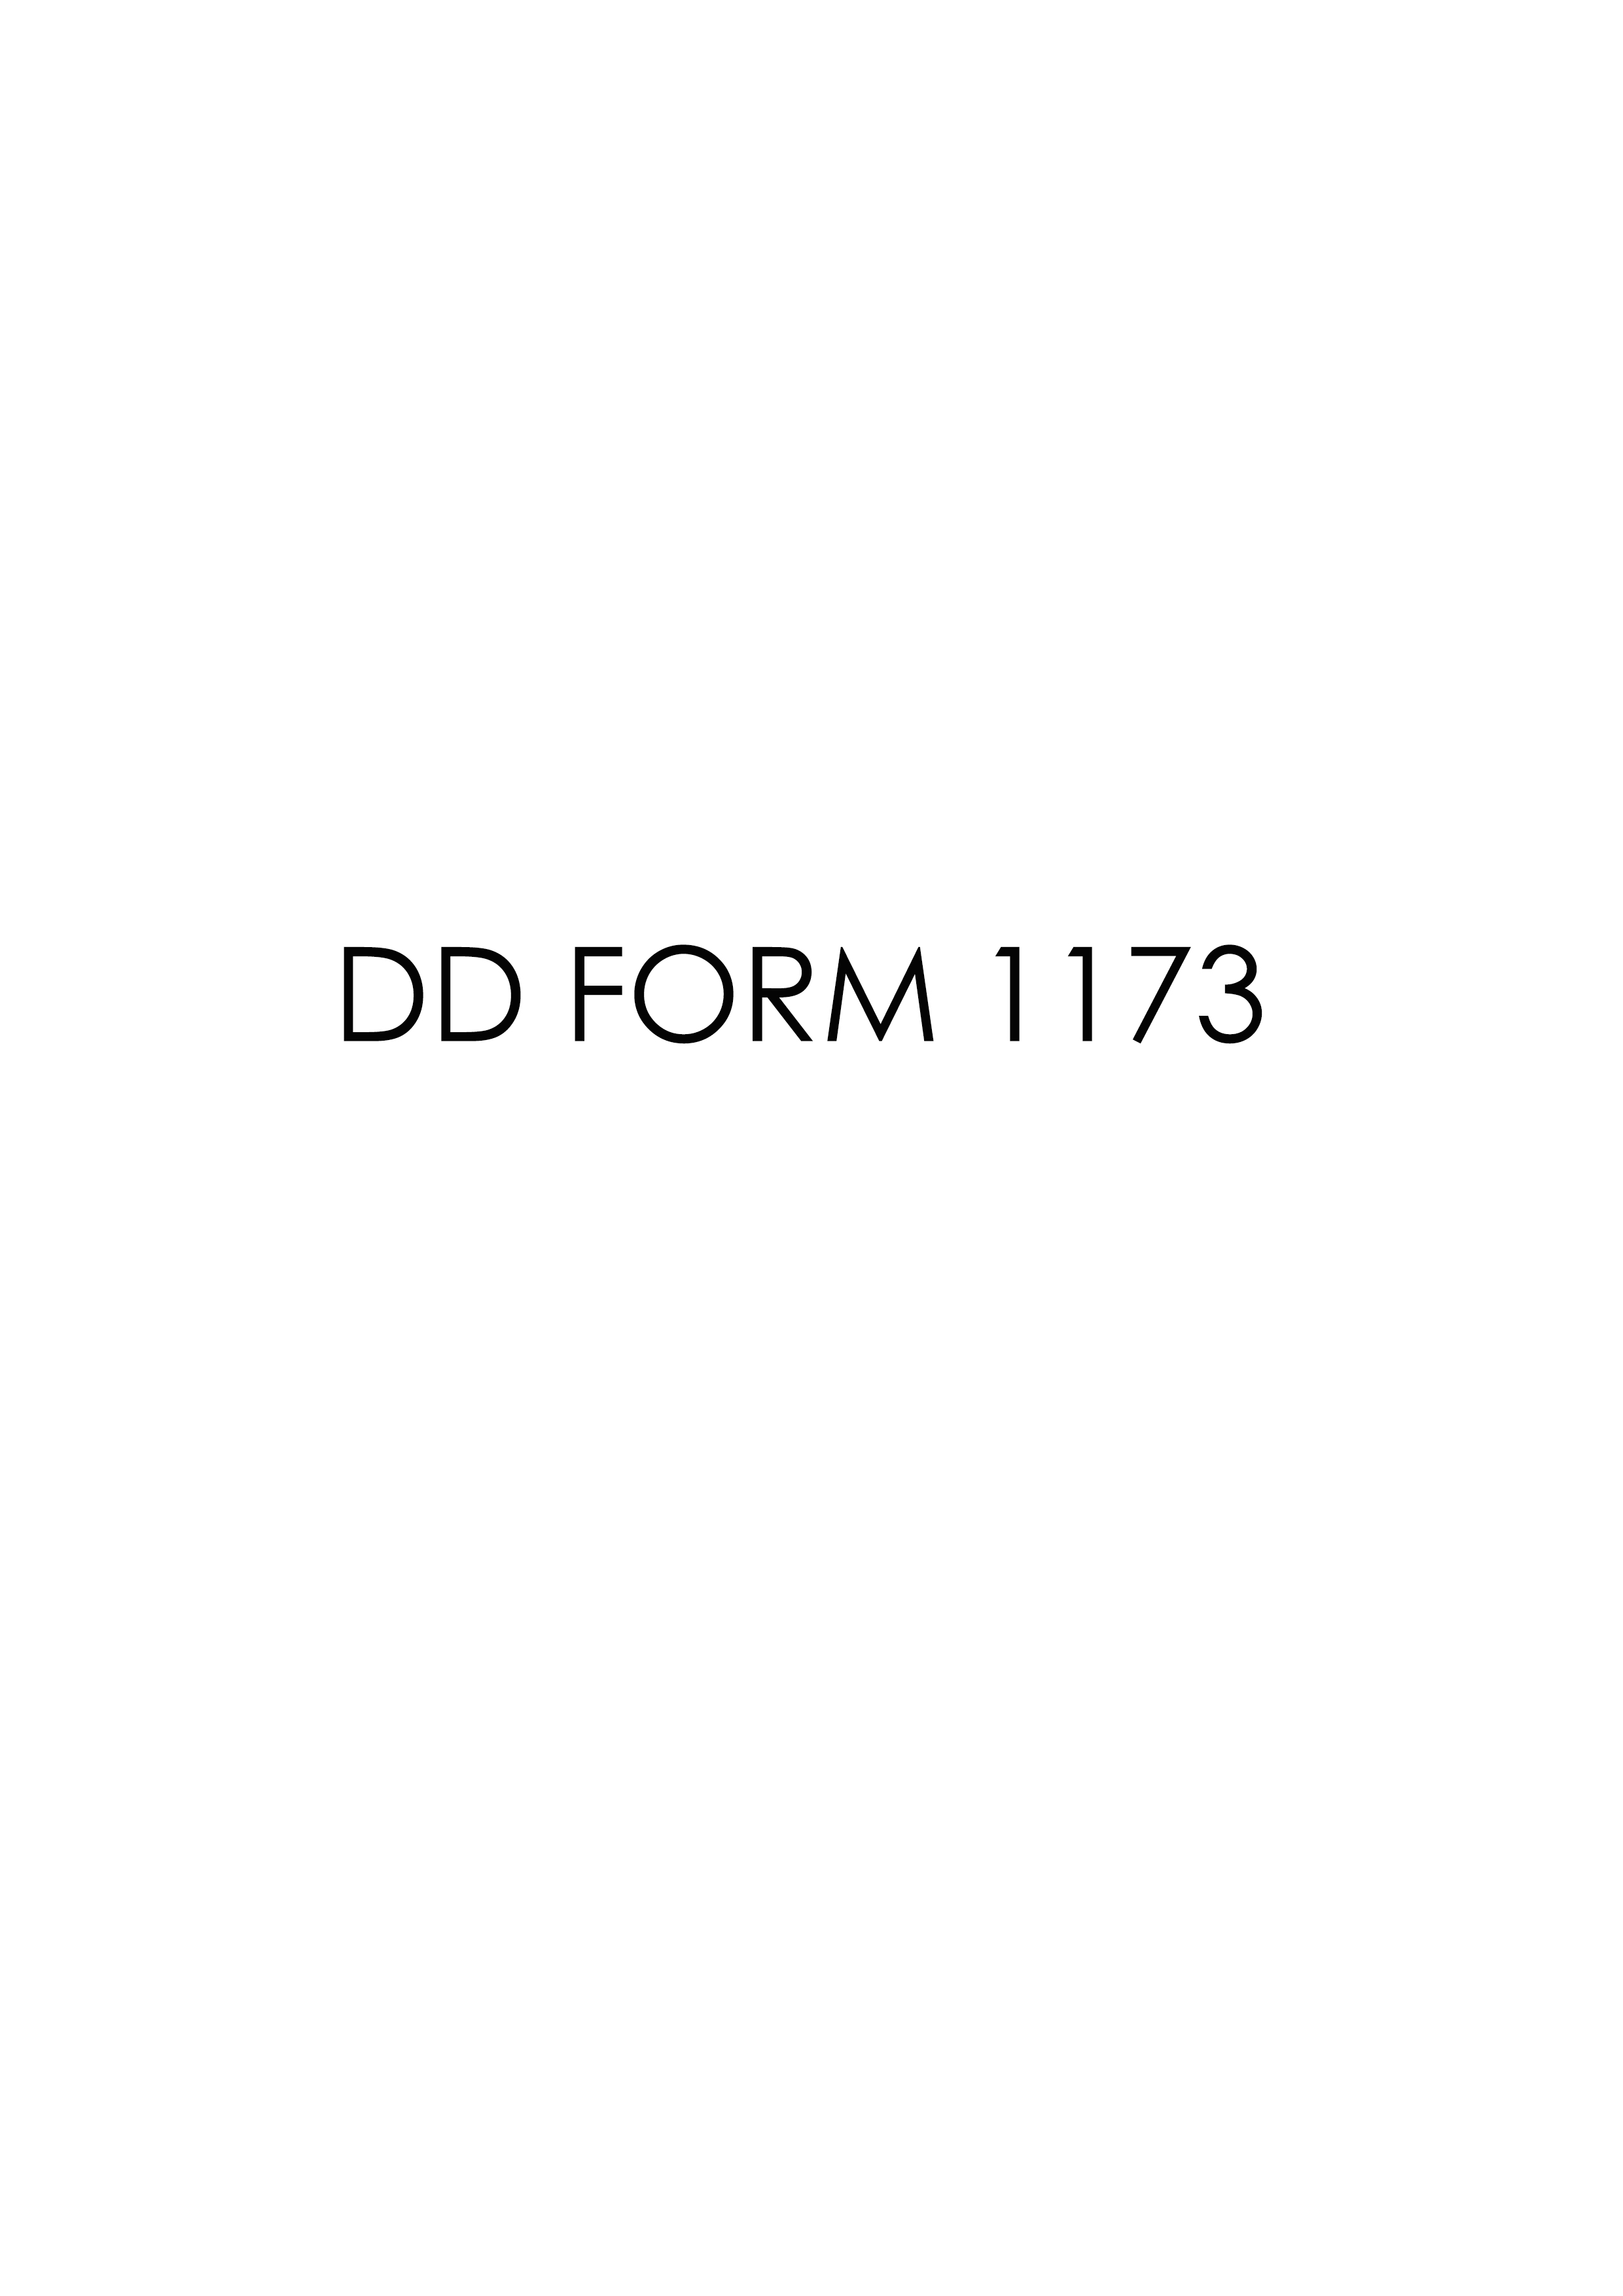 Download dd 1173 Form